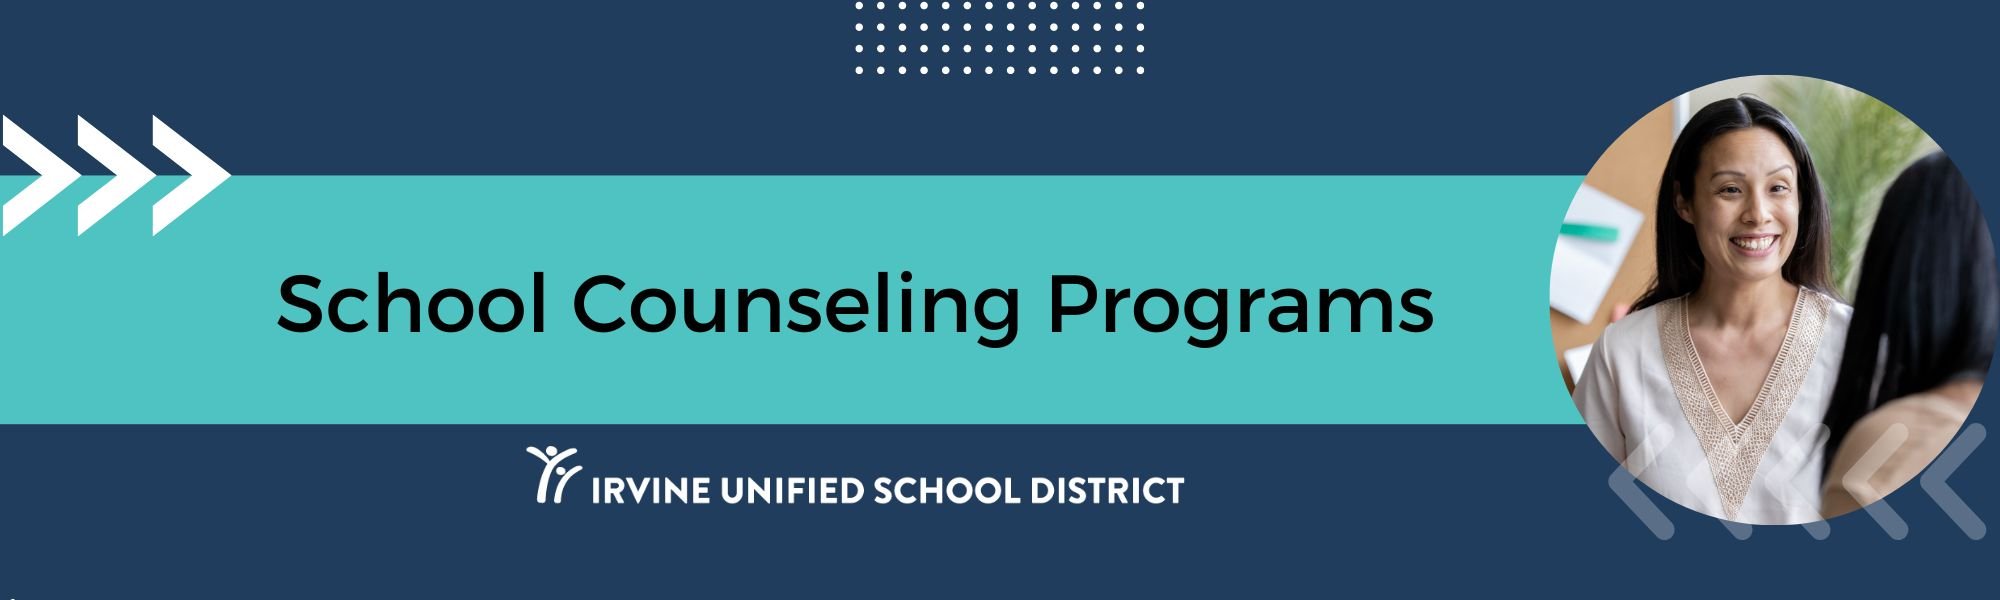 School Counseling Programs